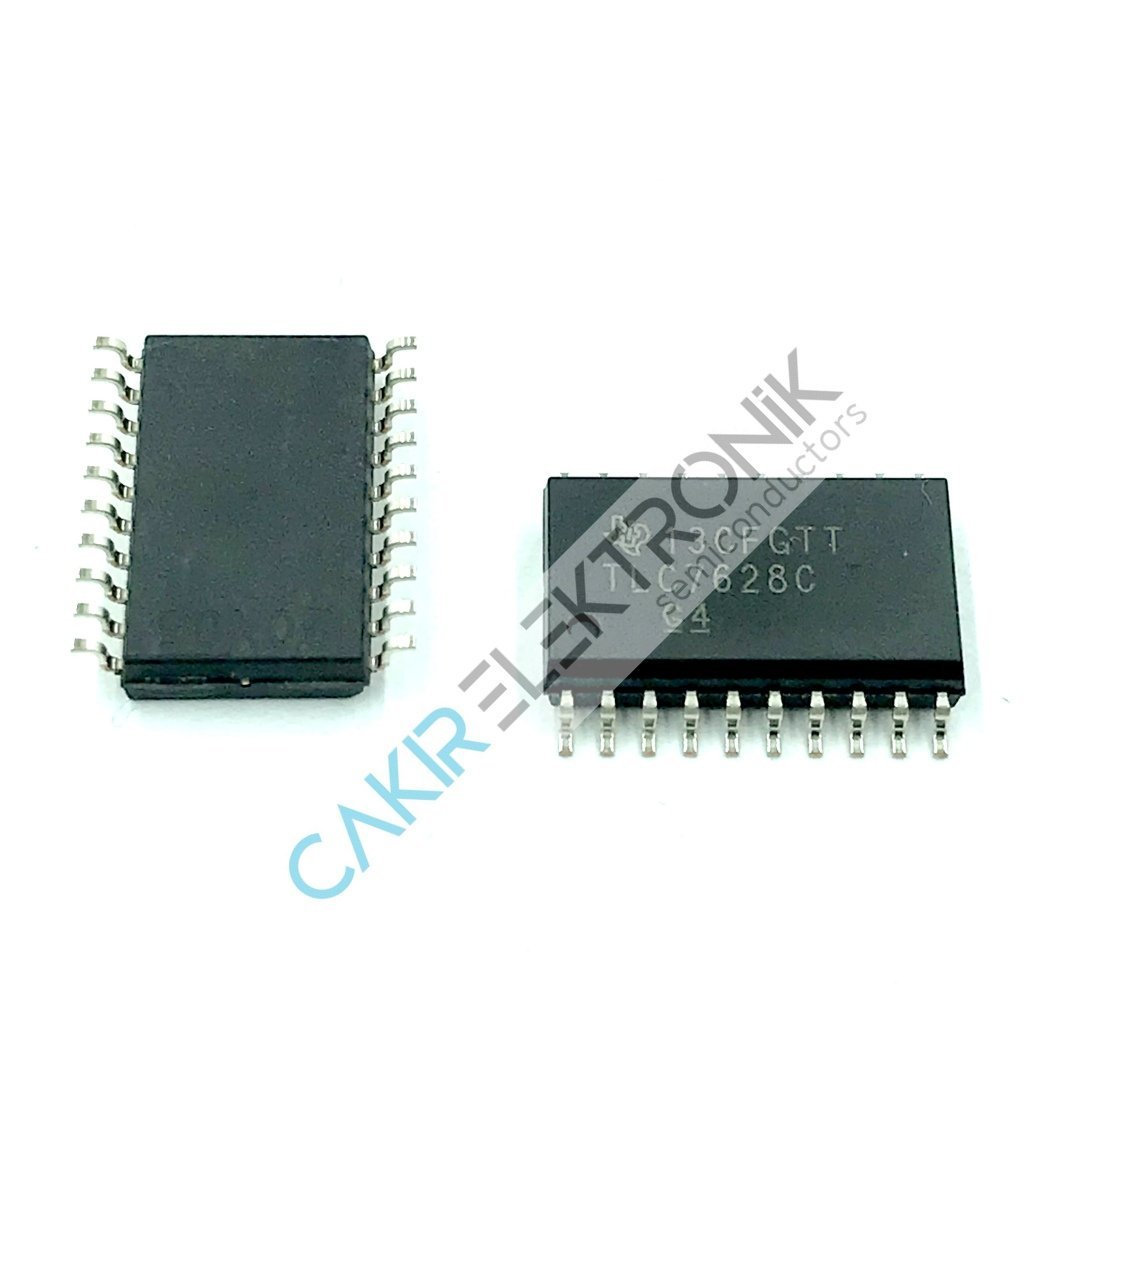 TLC7628C - TLC7628 - 8-Bit, 0.1 us Dual MDAC, Parallel Input, Fast Control Signalling for DSP